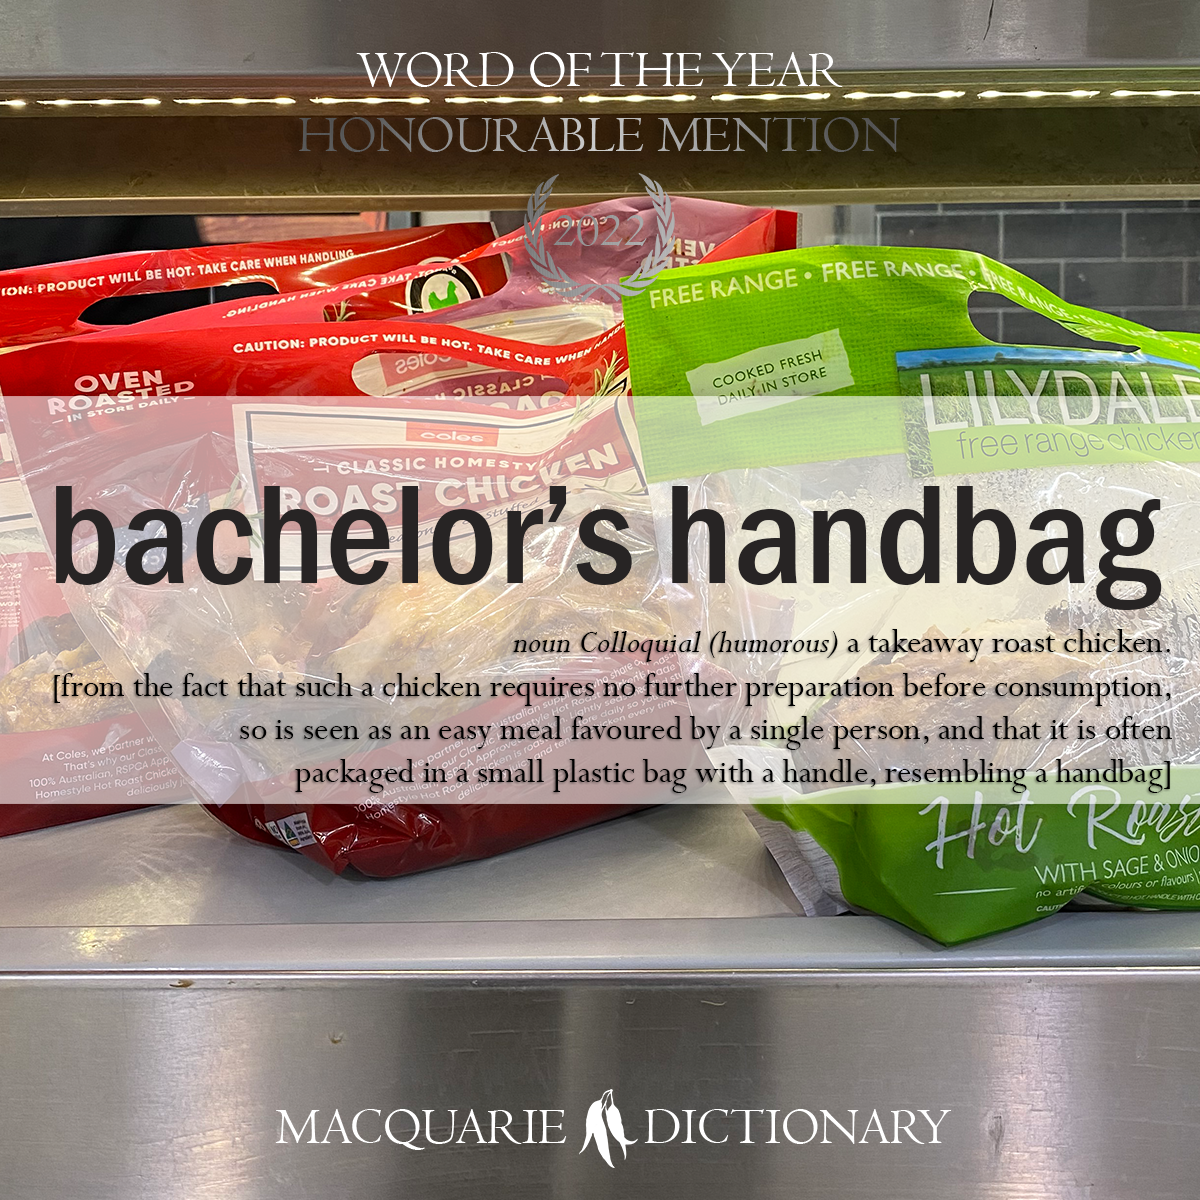 Word of the Year 2022 - bachelor's handbag hon mention